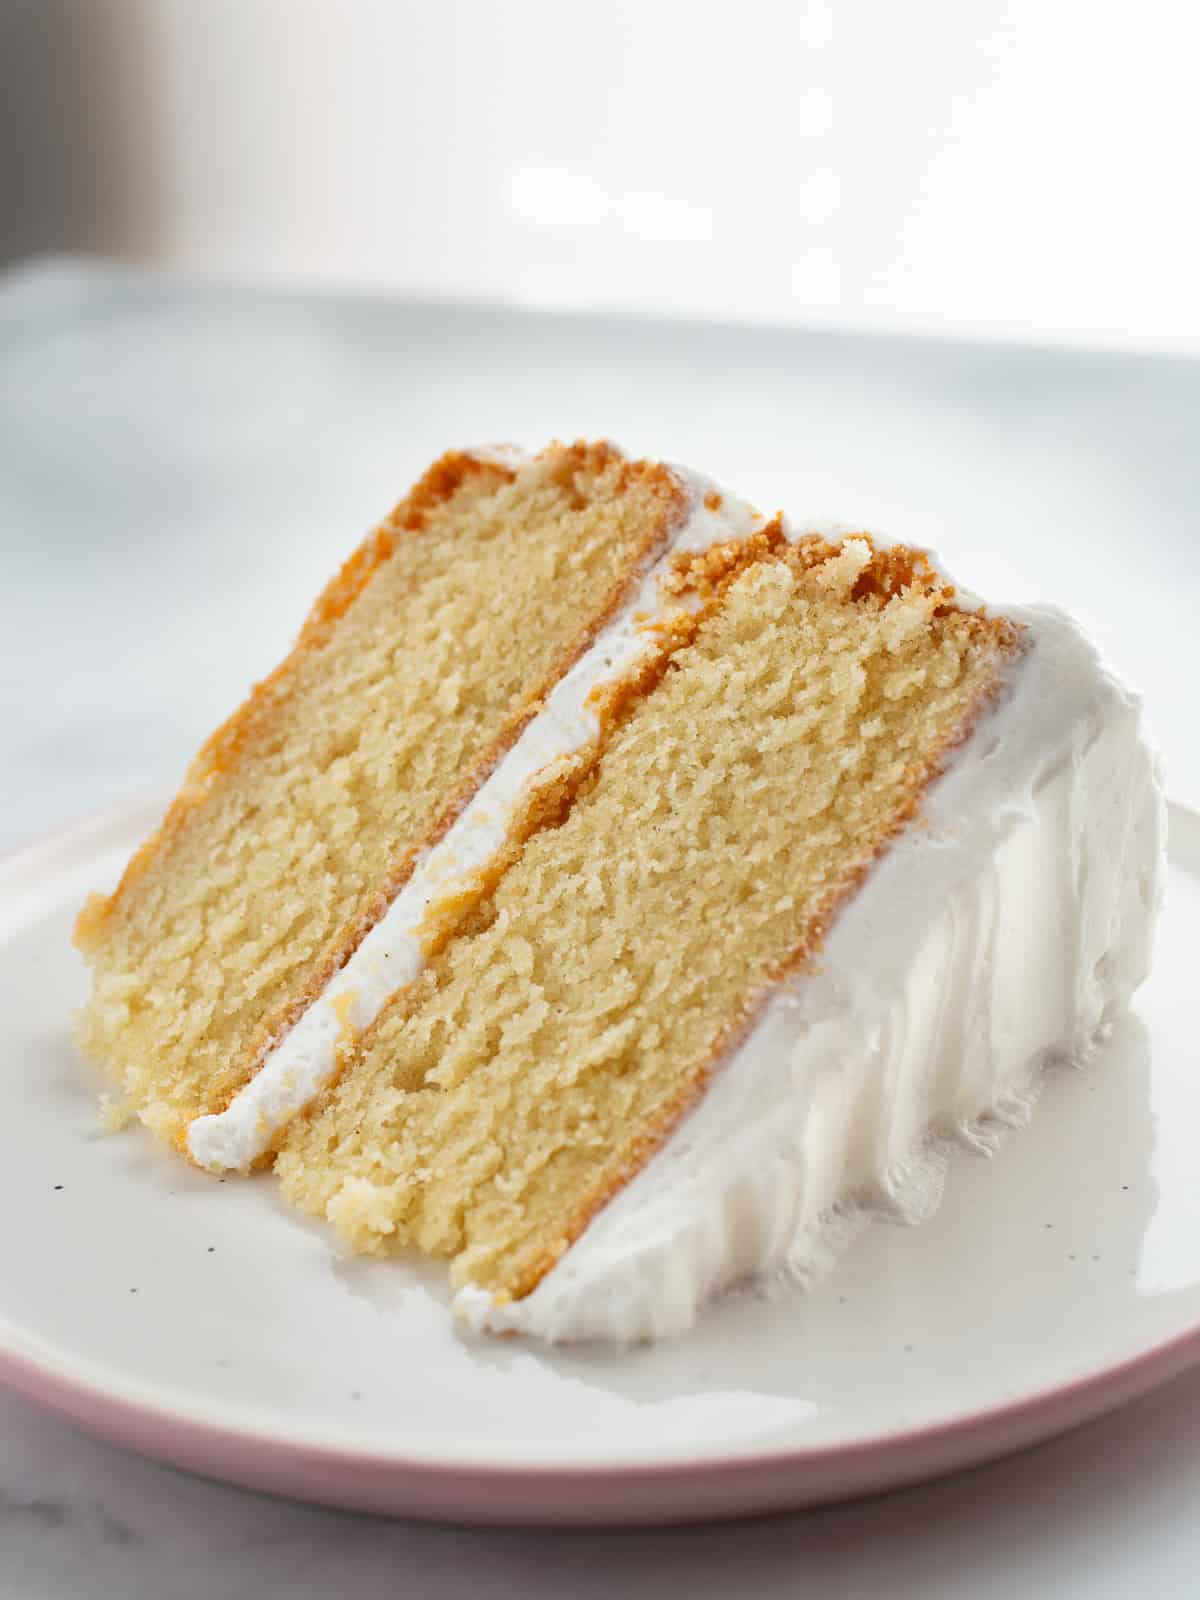 A slice of gluten-free vanilla cake on a plate.